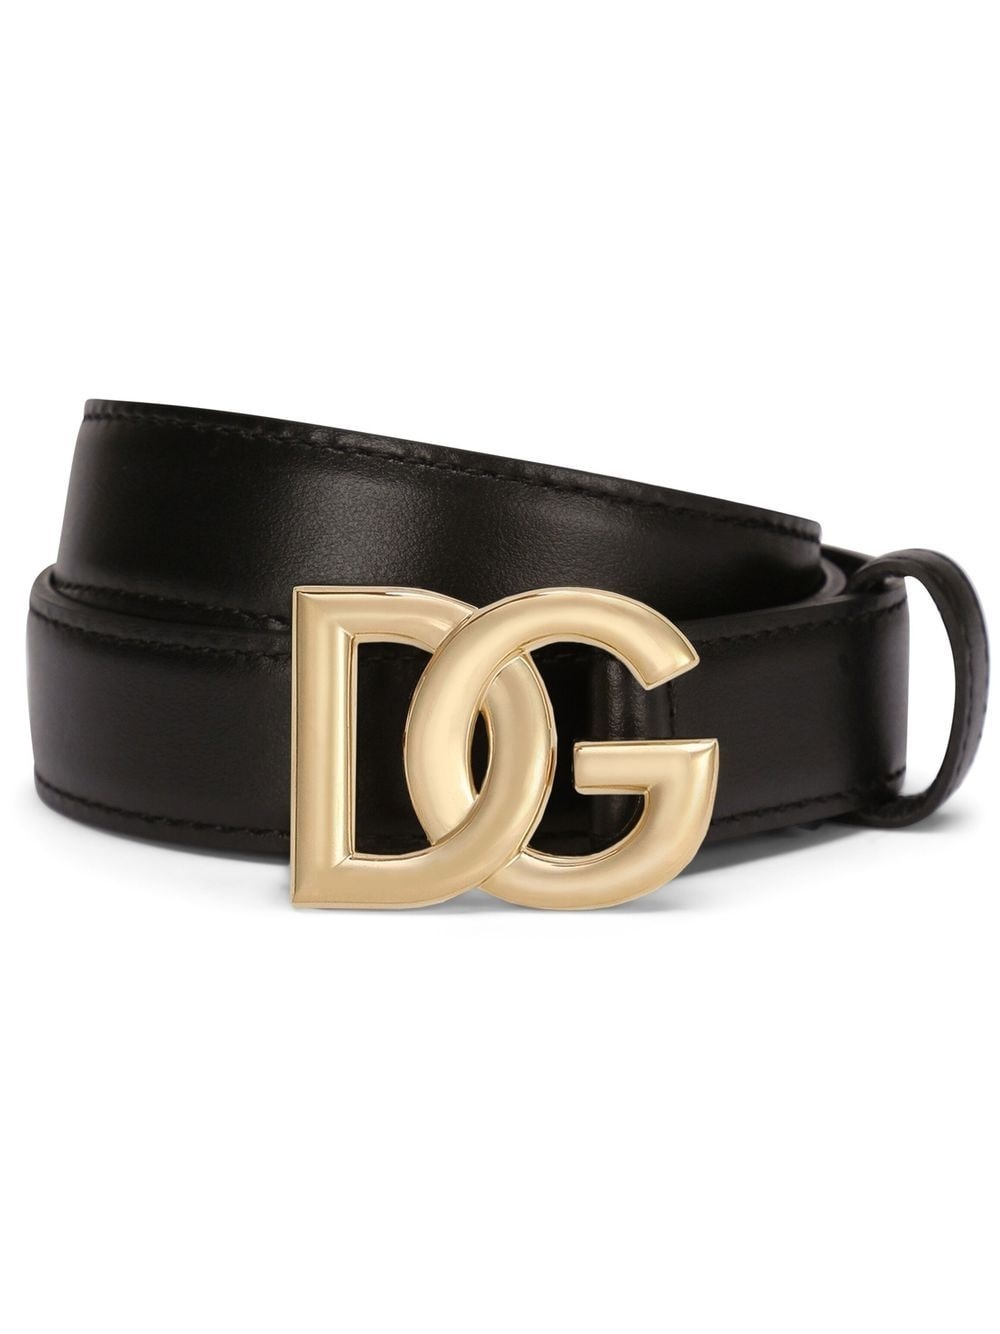 Dg logo leather belt - 1